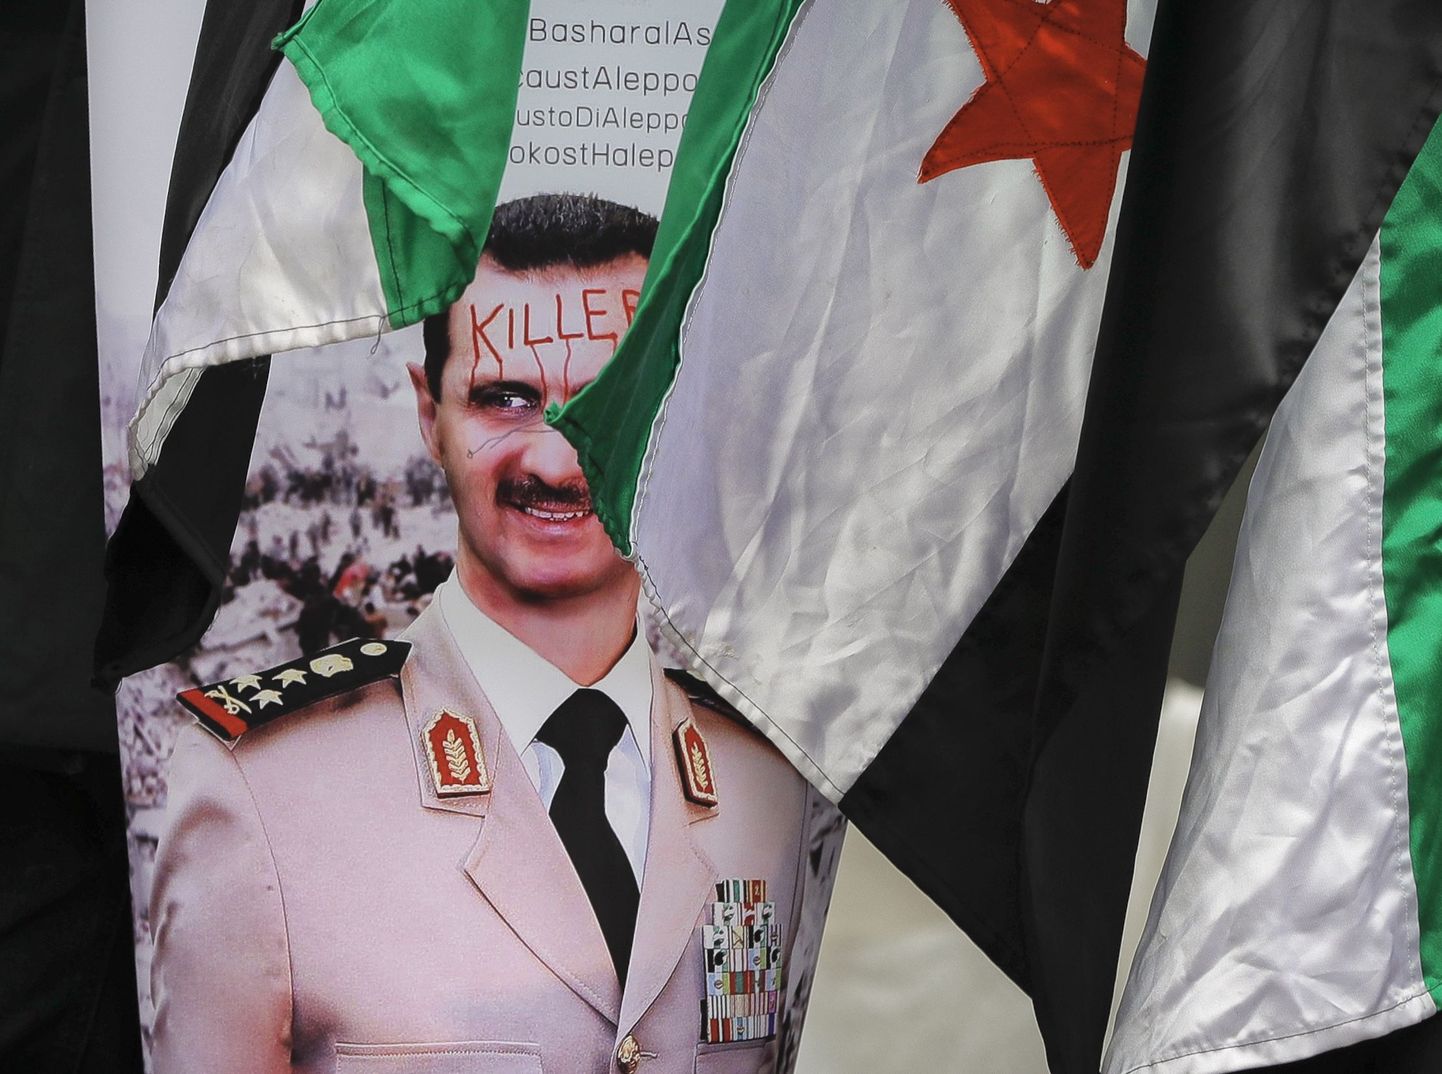 Plakat Bashar al-Assadi pildiga.